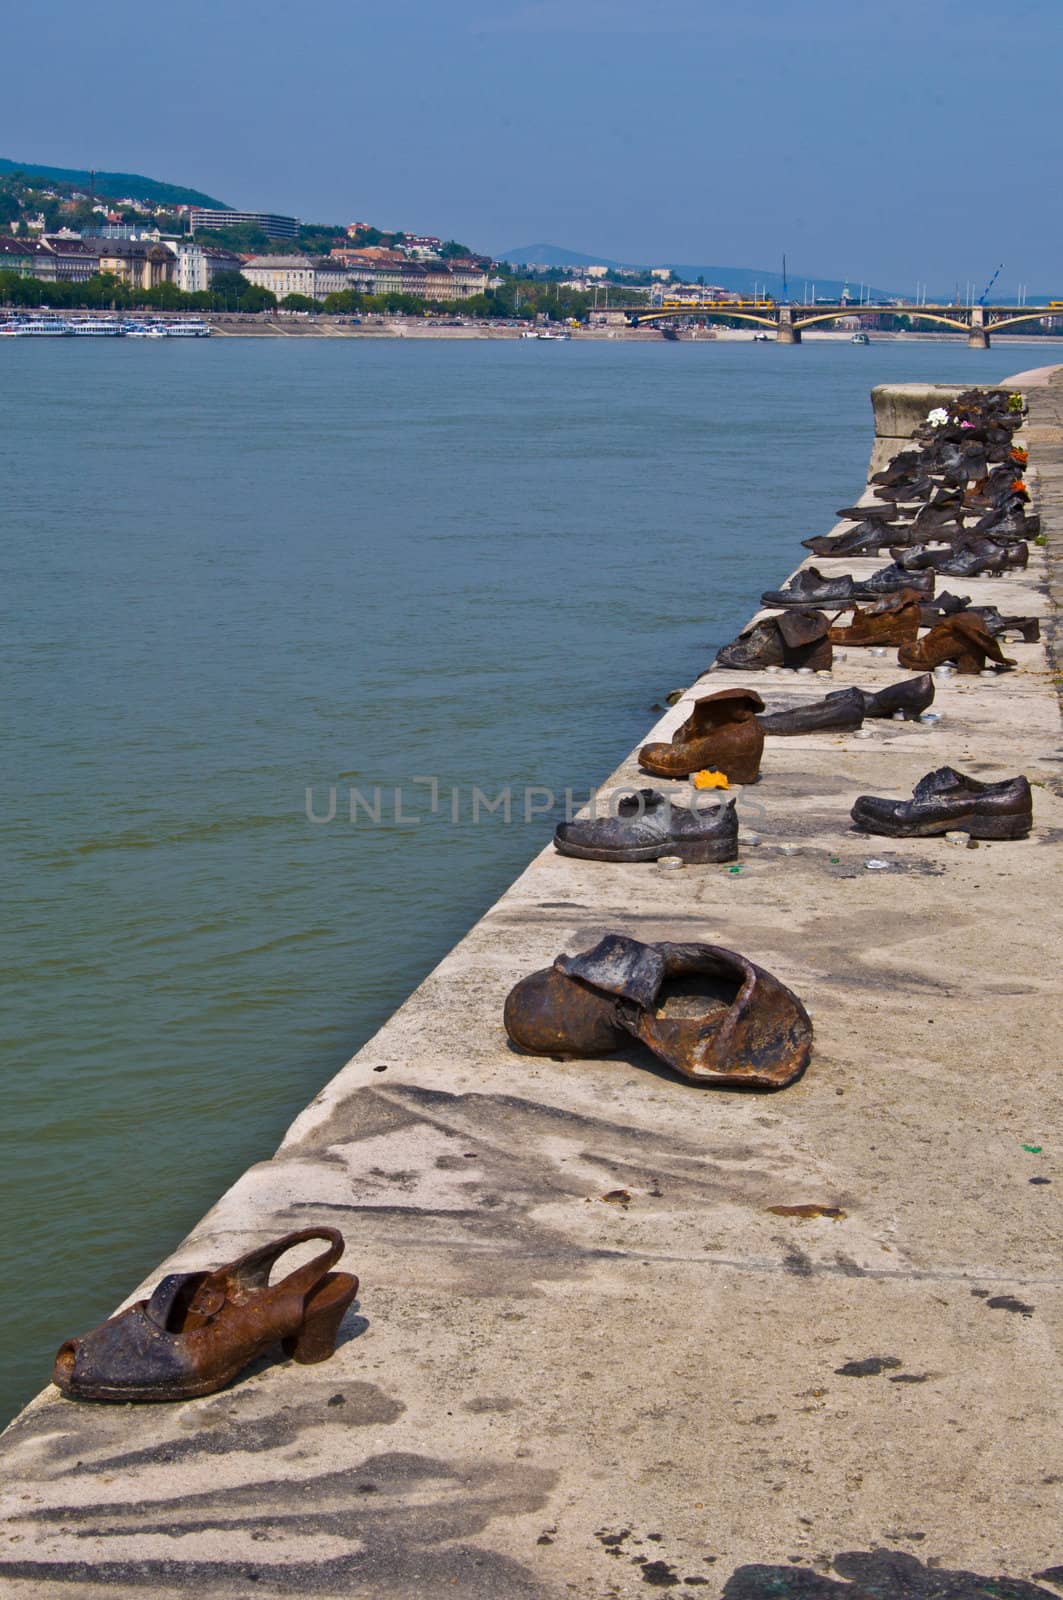 memorial of the Holocaust in Hungary at the Danube